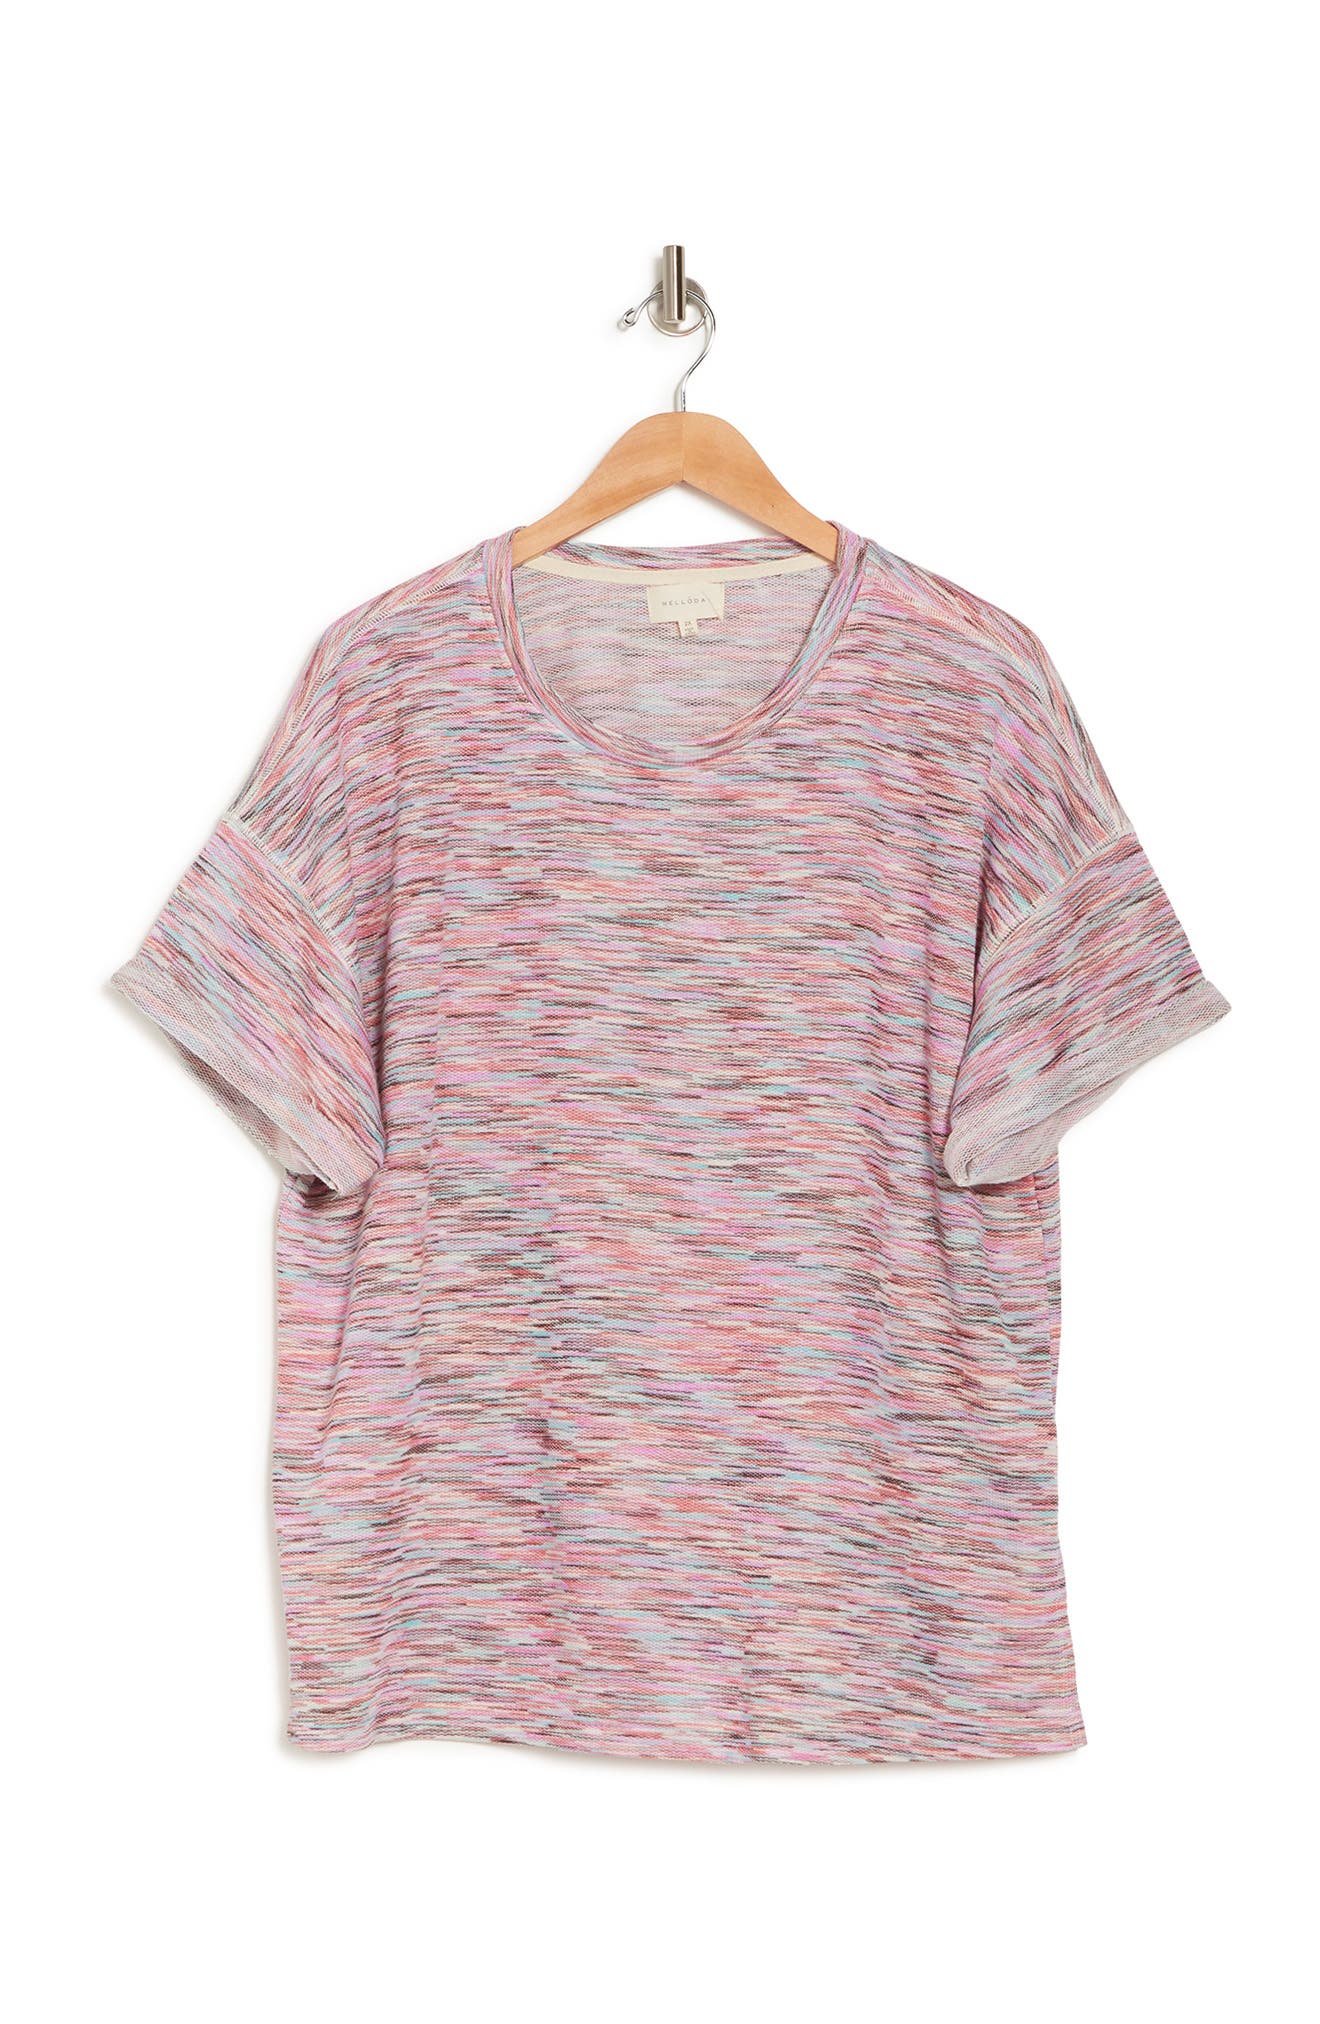 Melloday Space Dye Dolman Sleeve T-shirt In Pink Combo